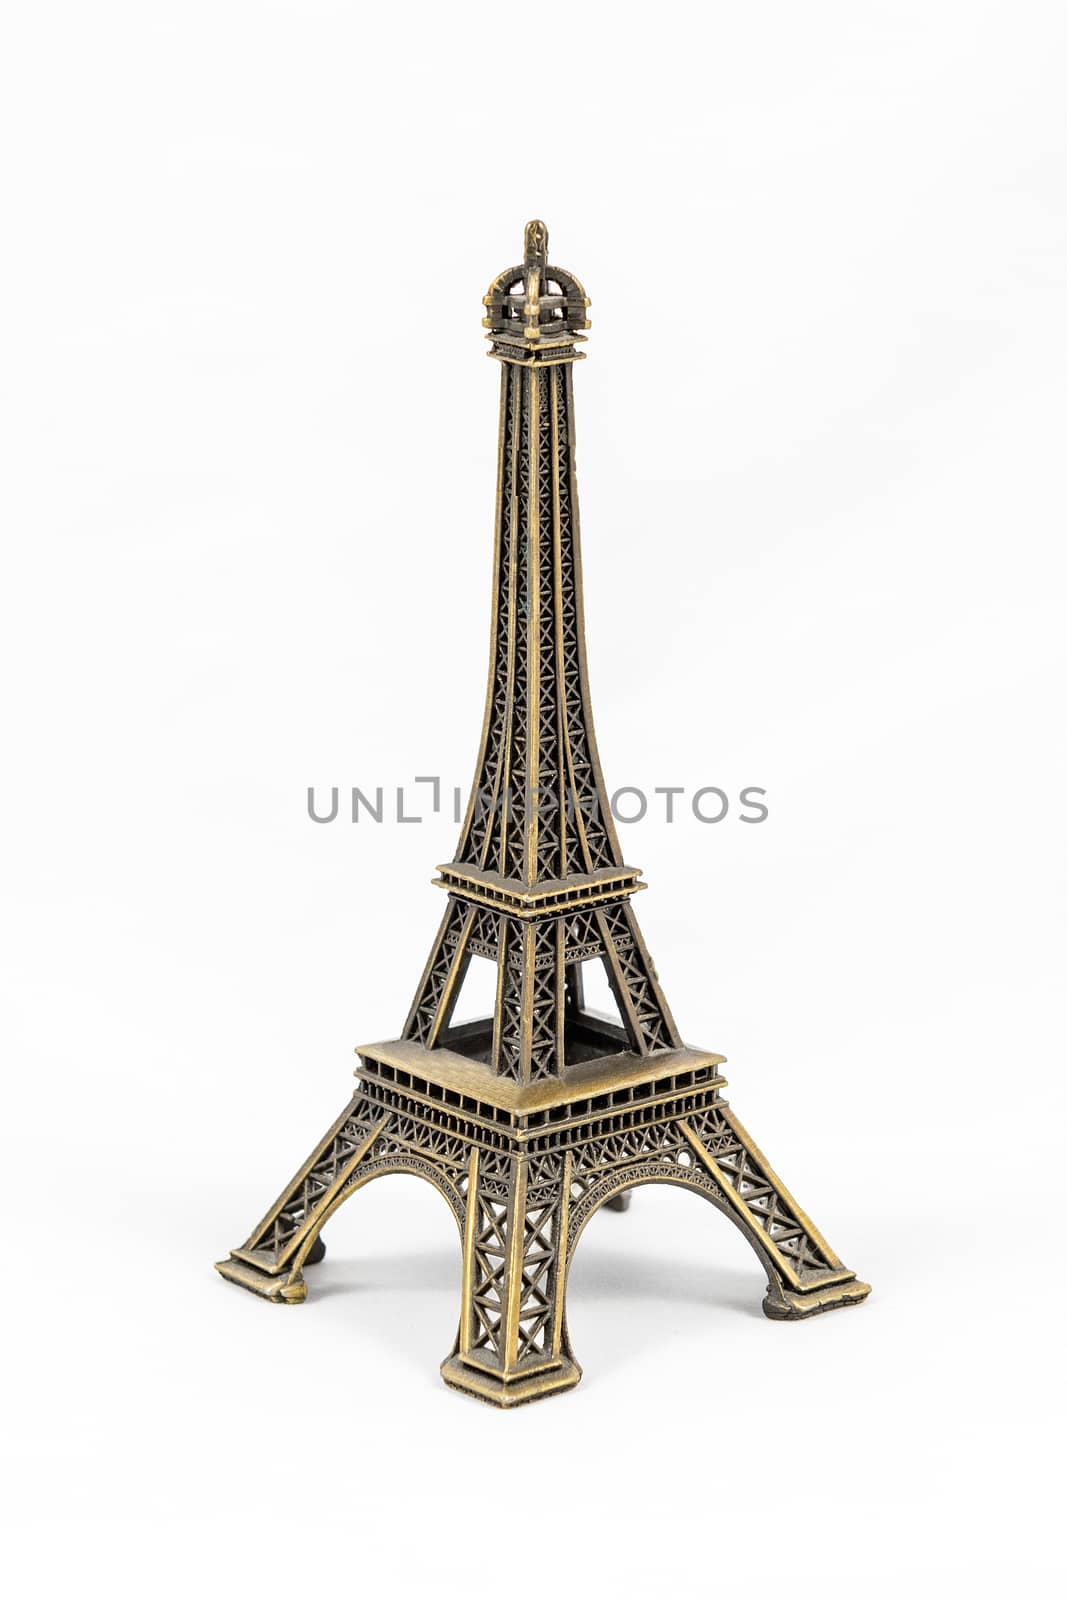 Bronze Eiffel Tower model, isolated on white background by marcorubino